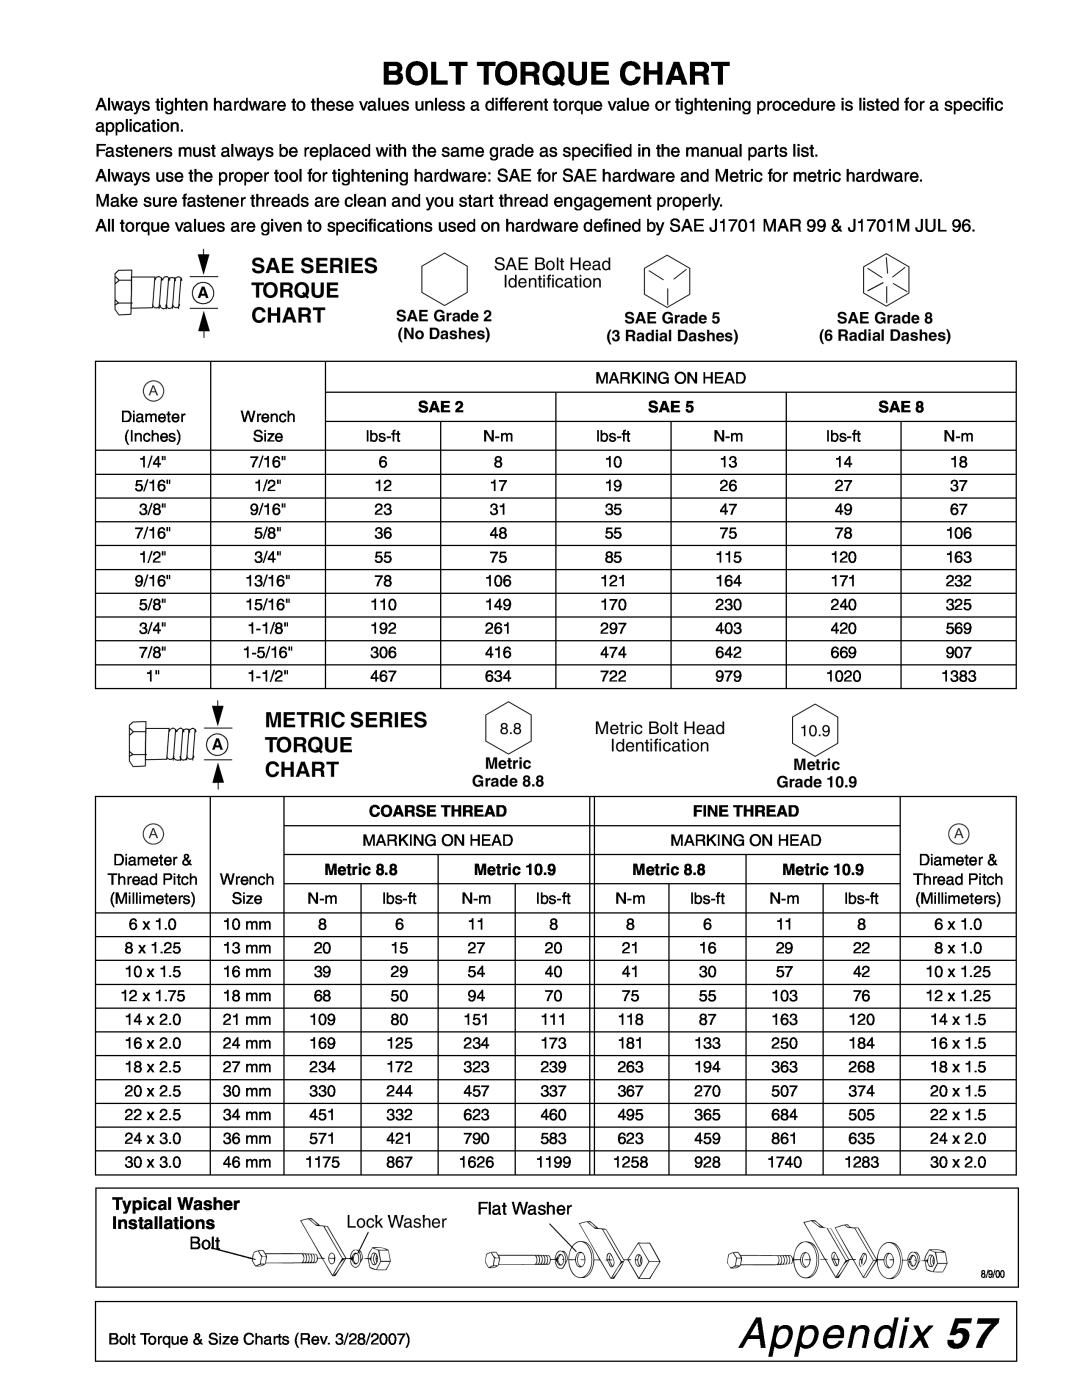 Woods Equipment MD80-2 manual Appendix, Bolt Torque Chart, Sae Series A Torque Chart, Metric Series 